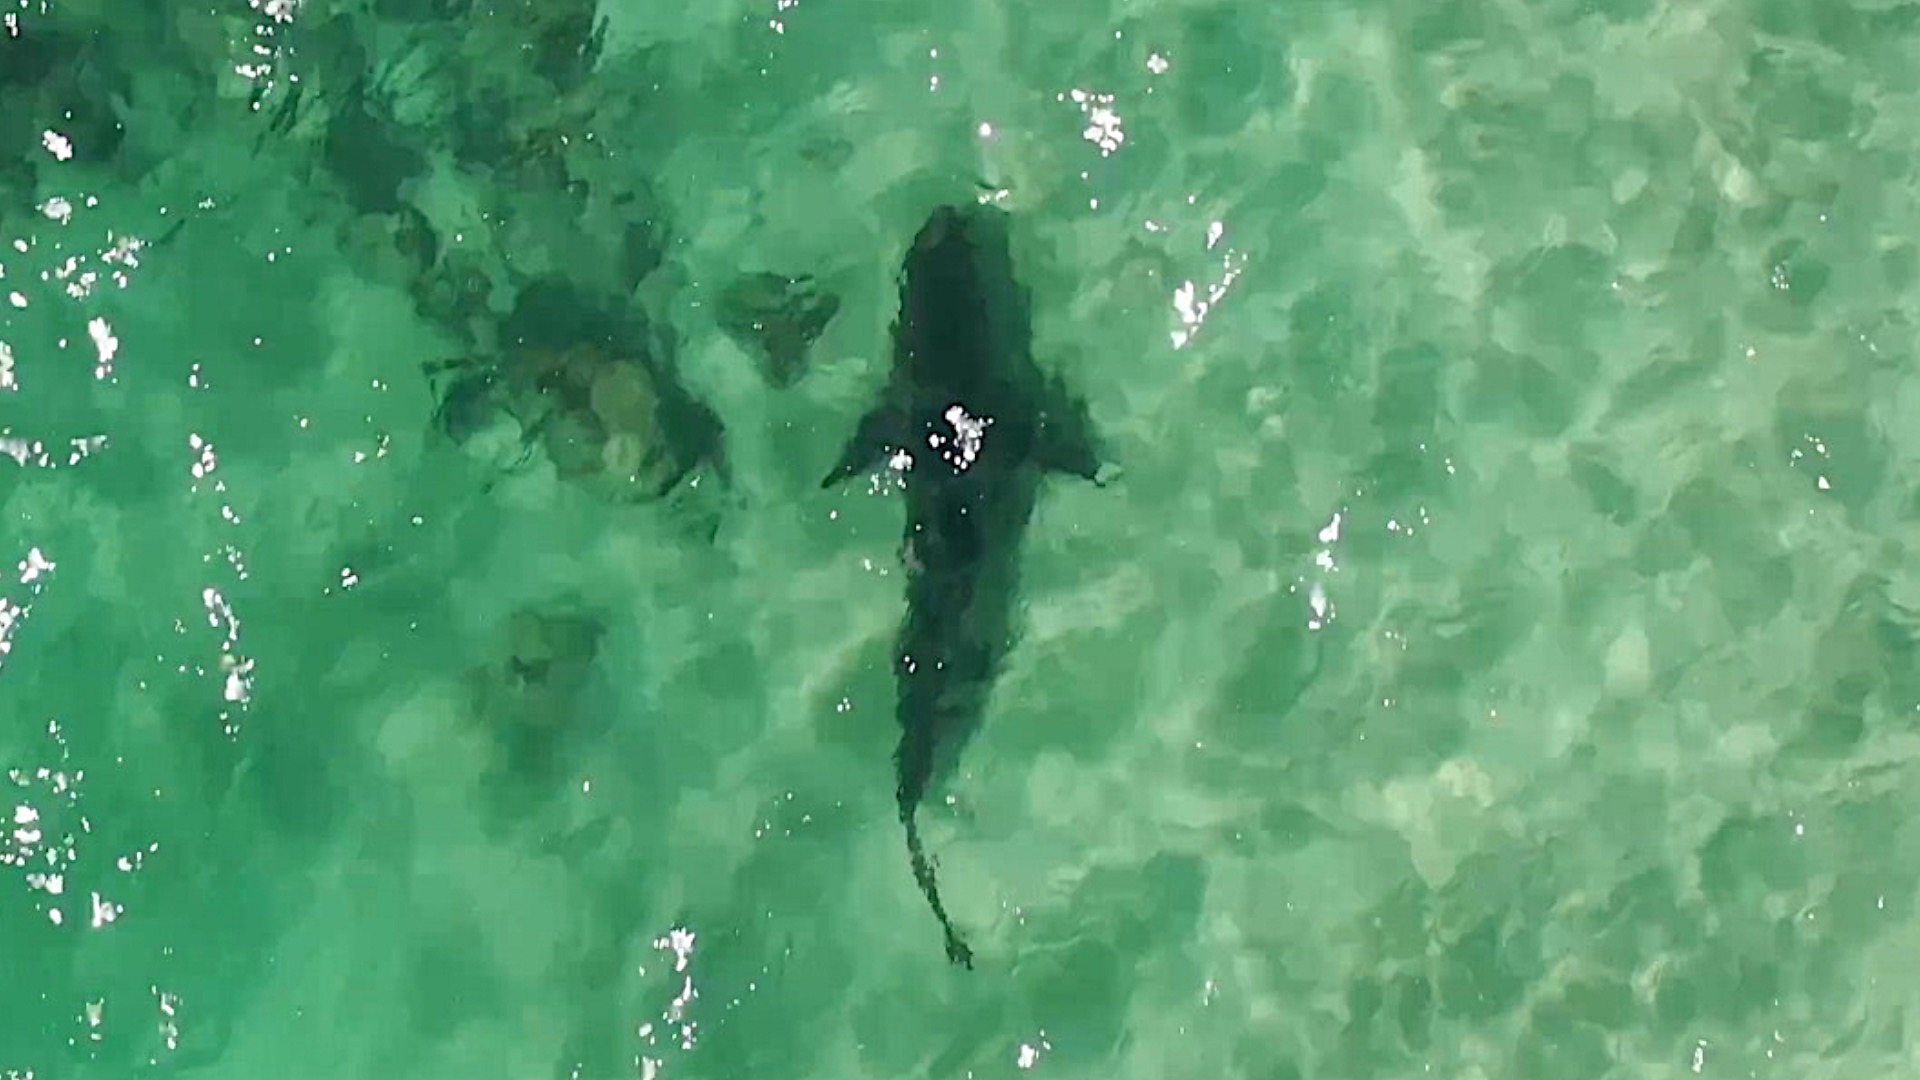 British drone user raises shark alarm in Australia - BBC News